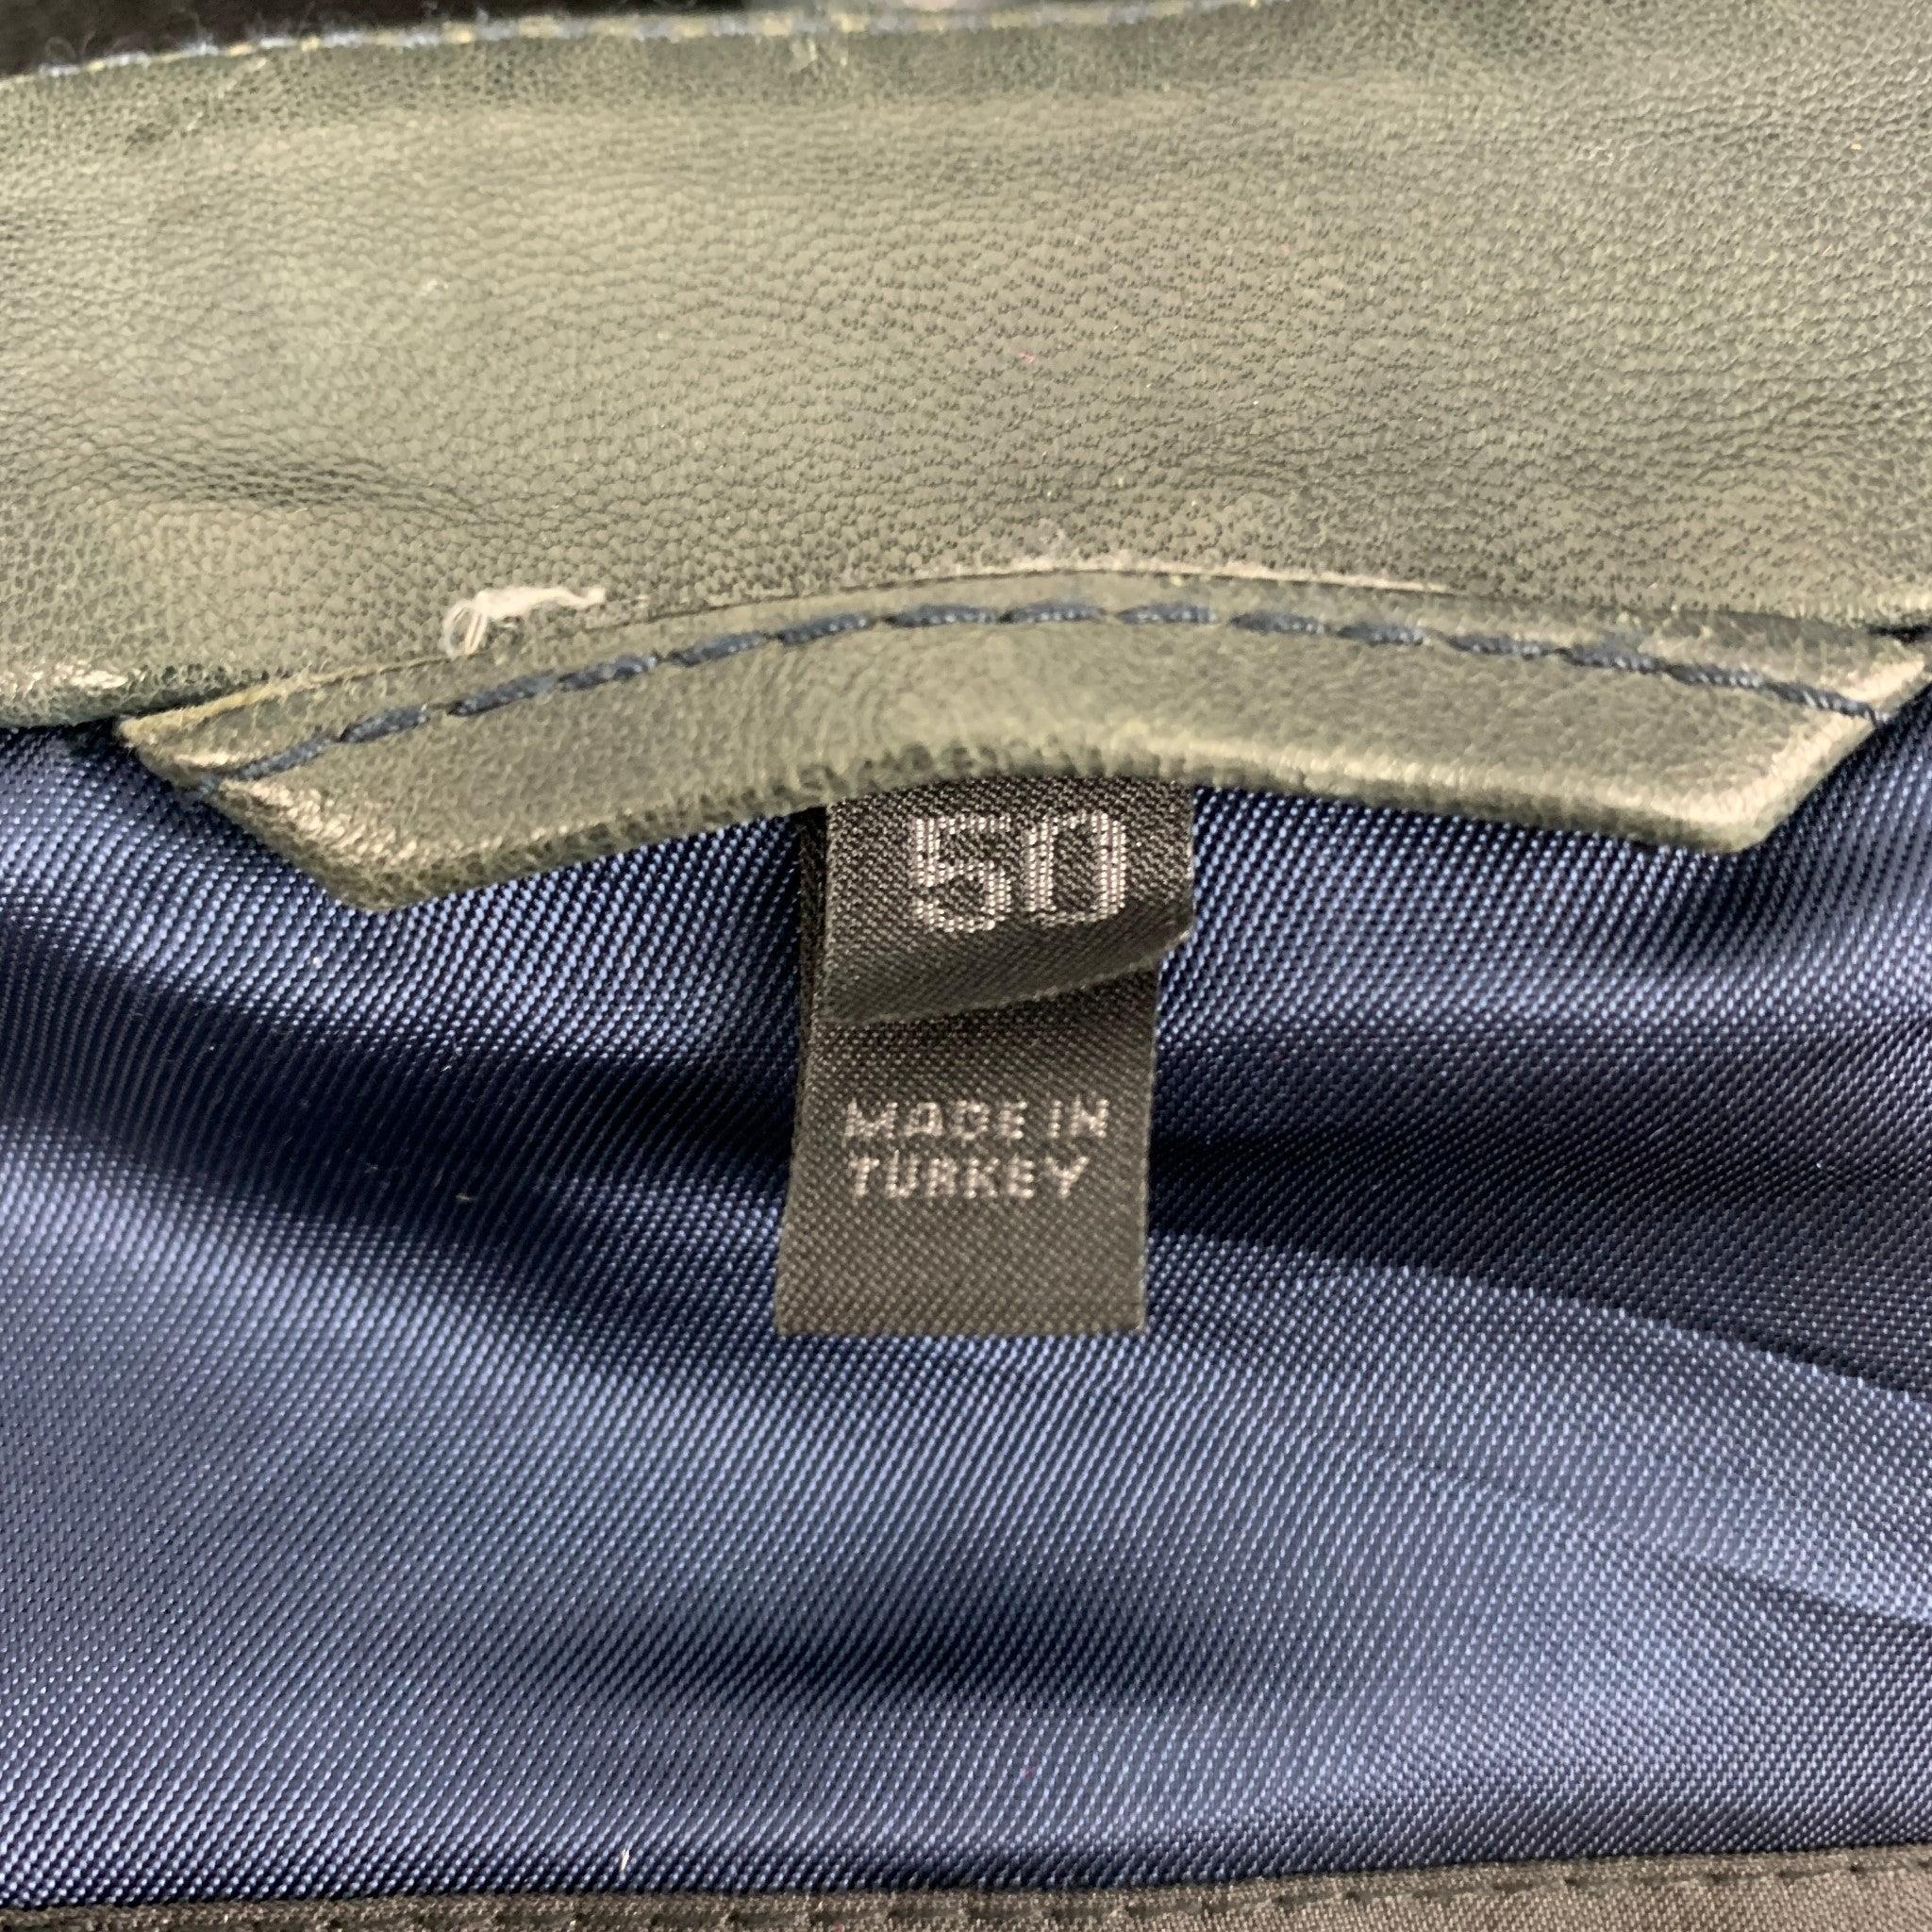 BELSTAFF Size M Gray Leather Zip Up Jacket 2